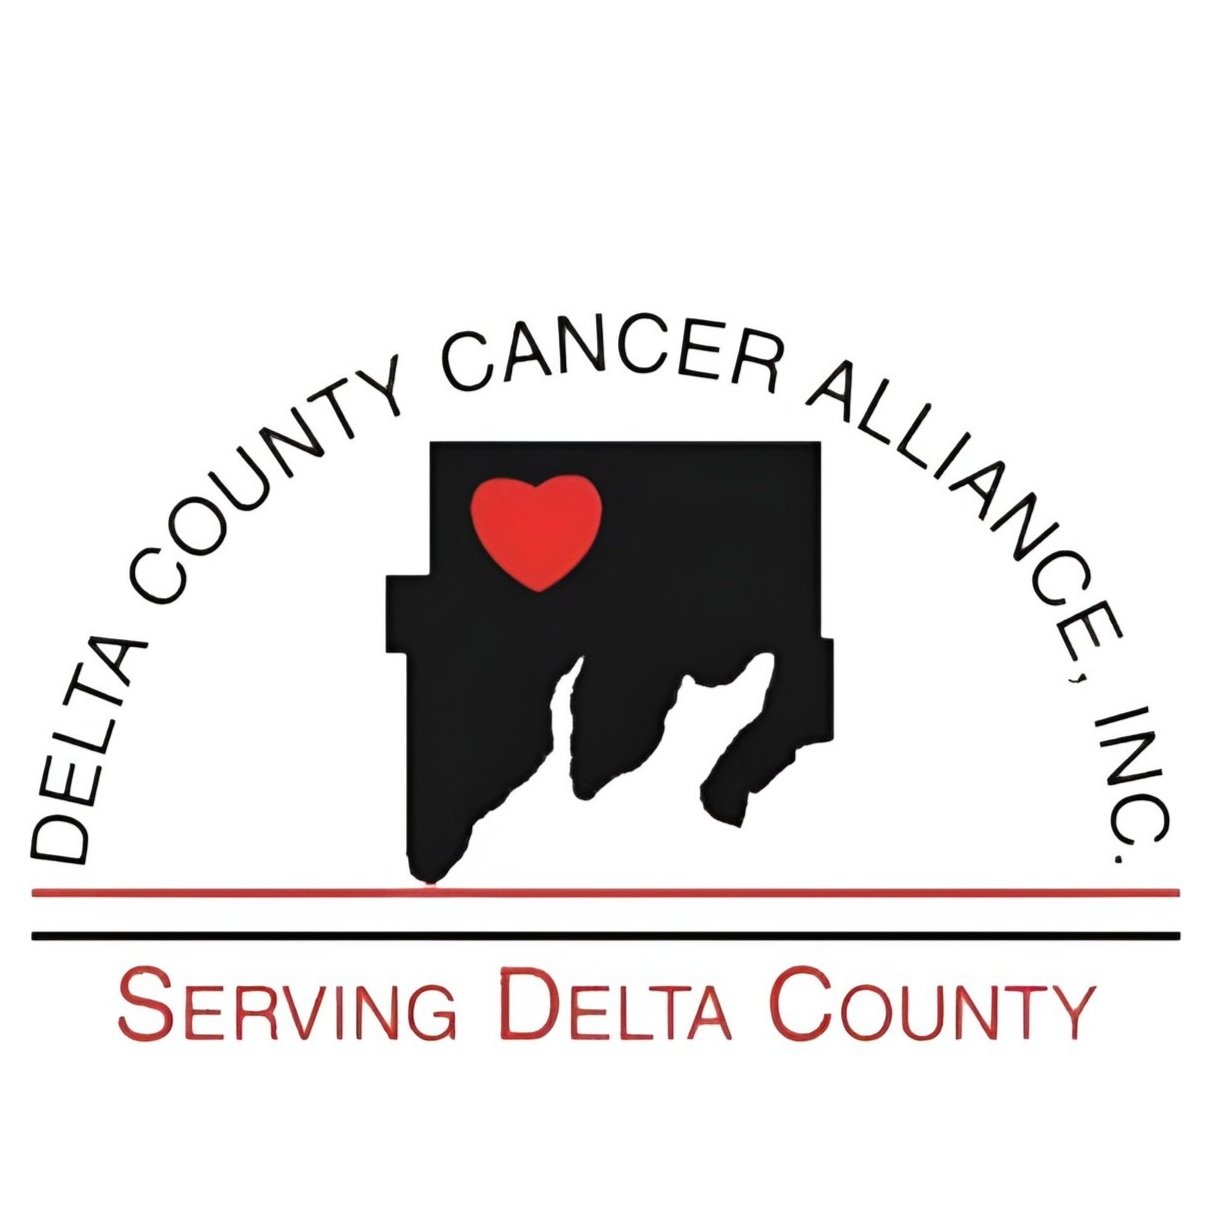 Delta County Cancer Alliance